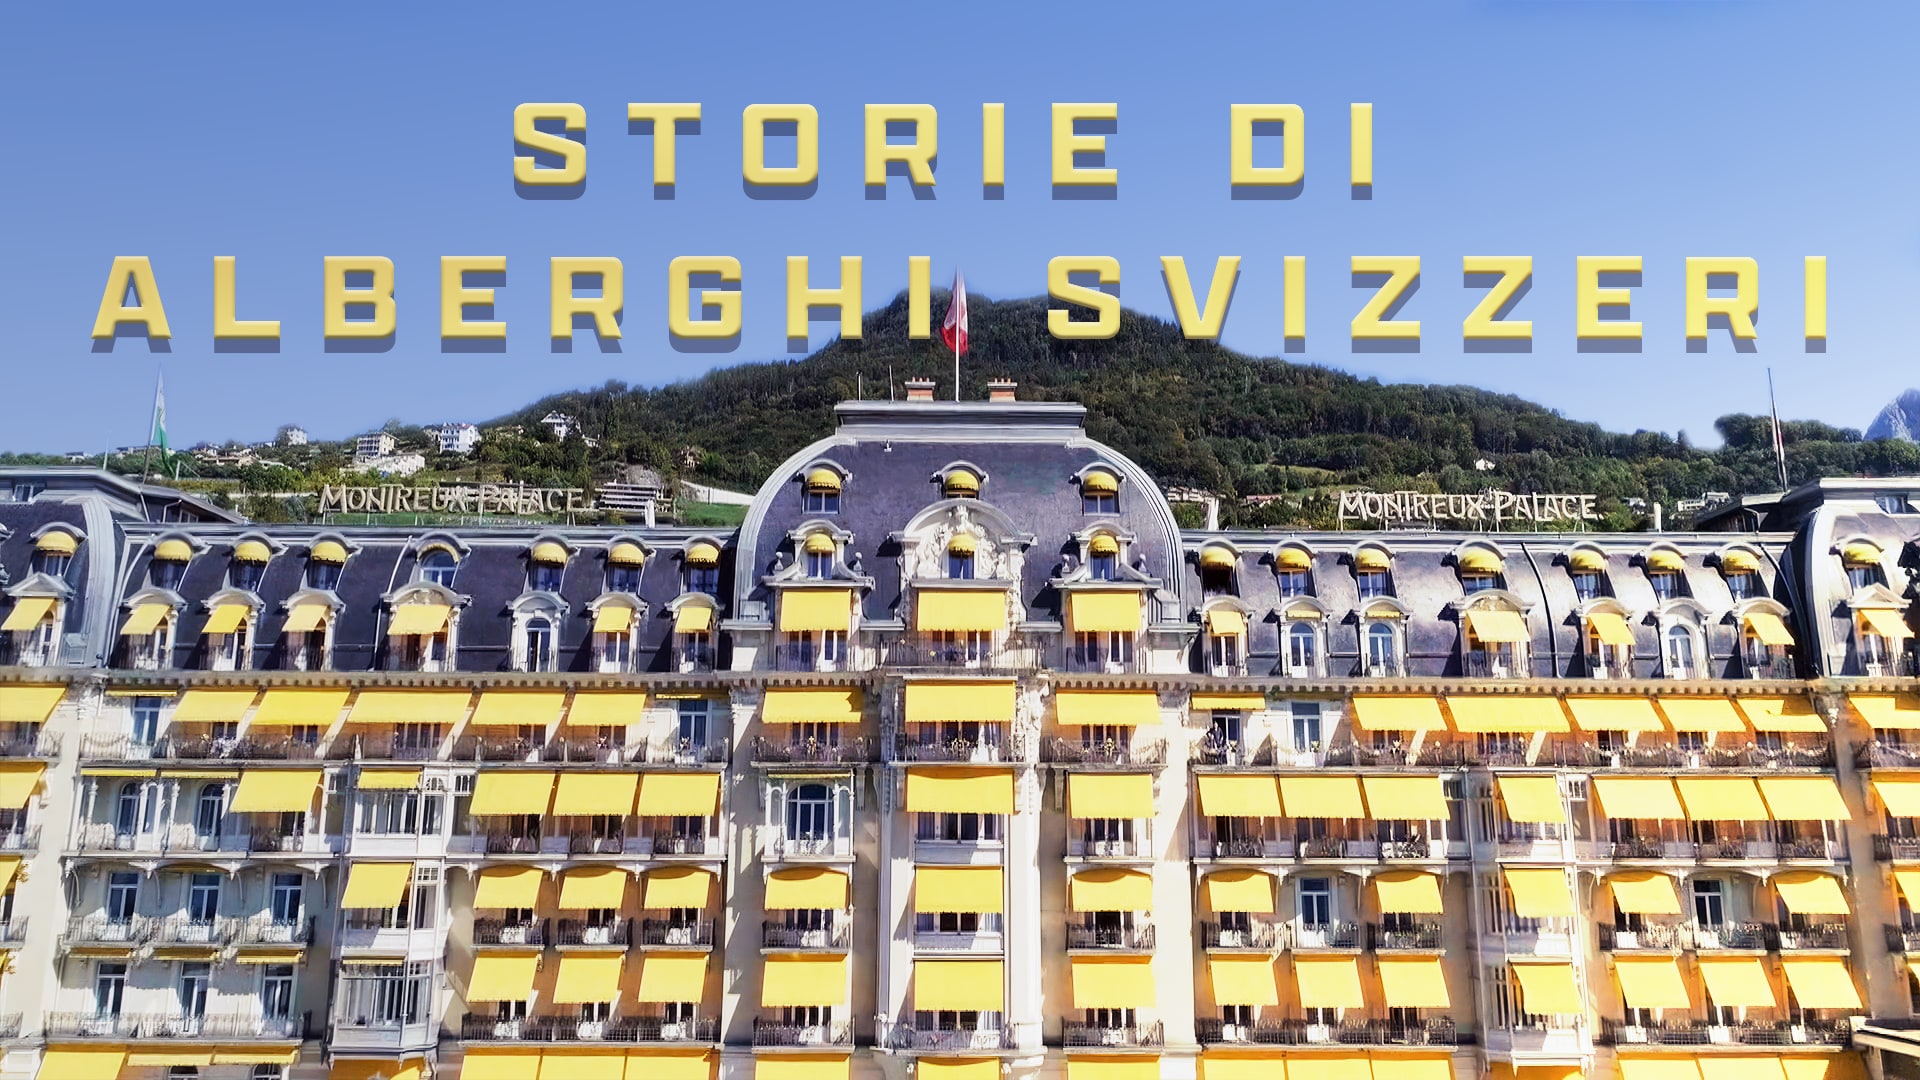 Storie di alberghi svizzeri